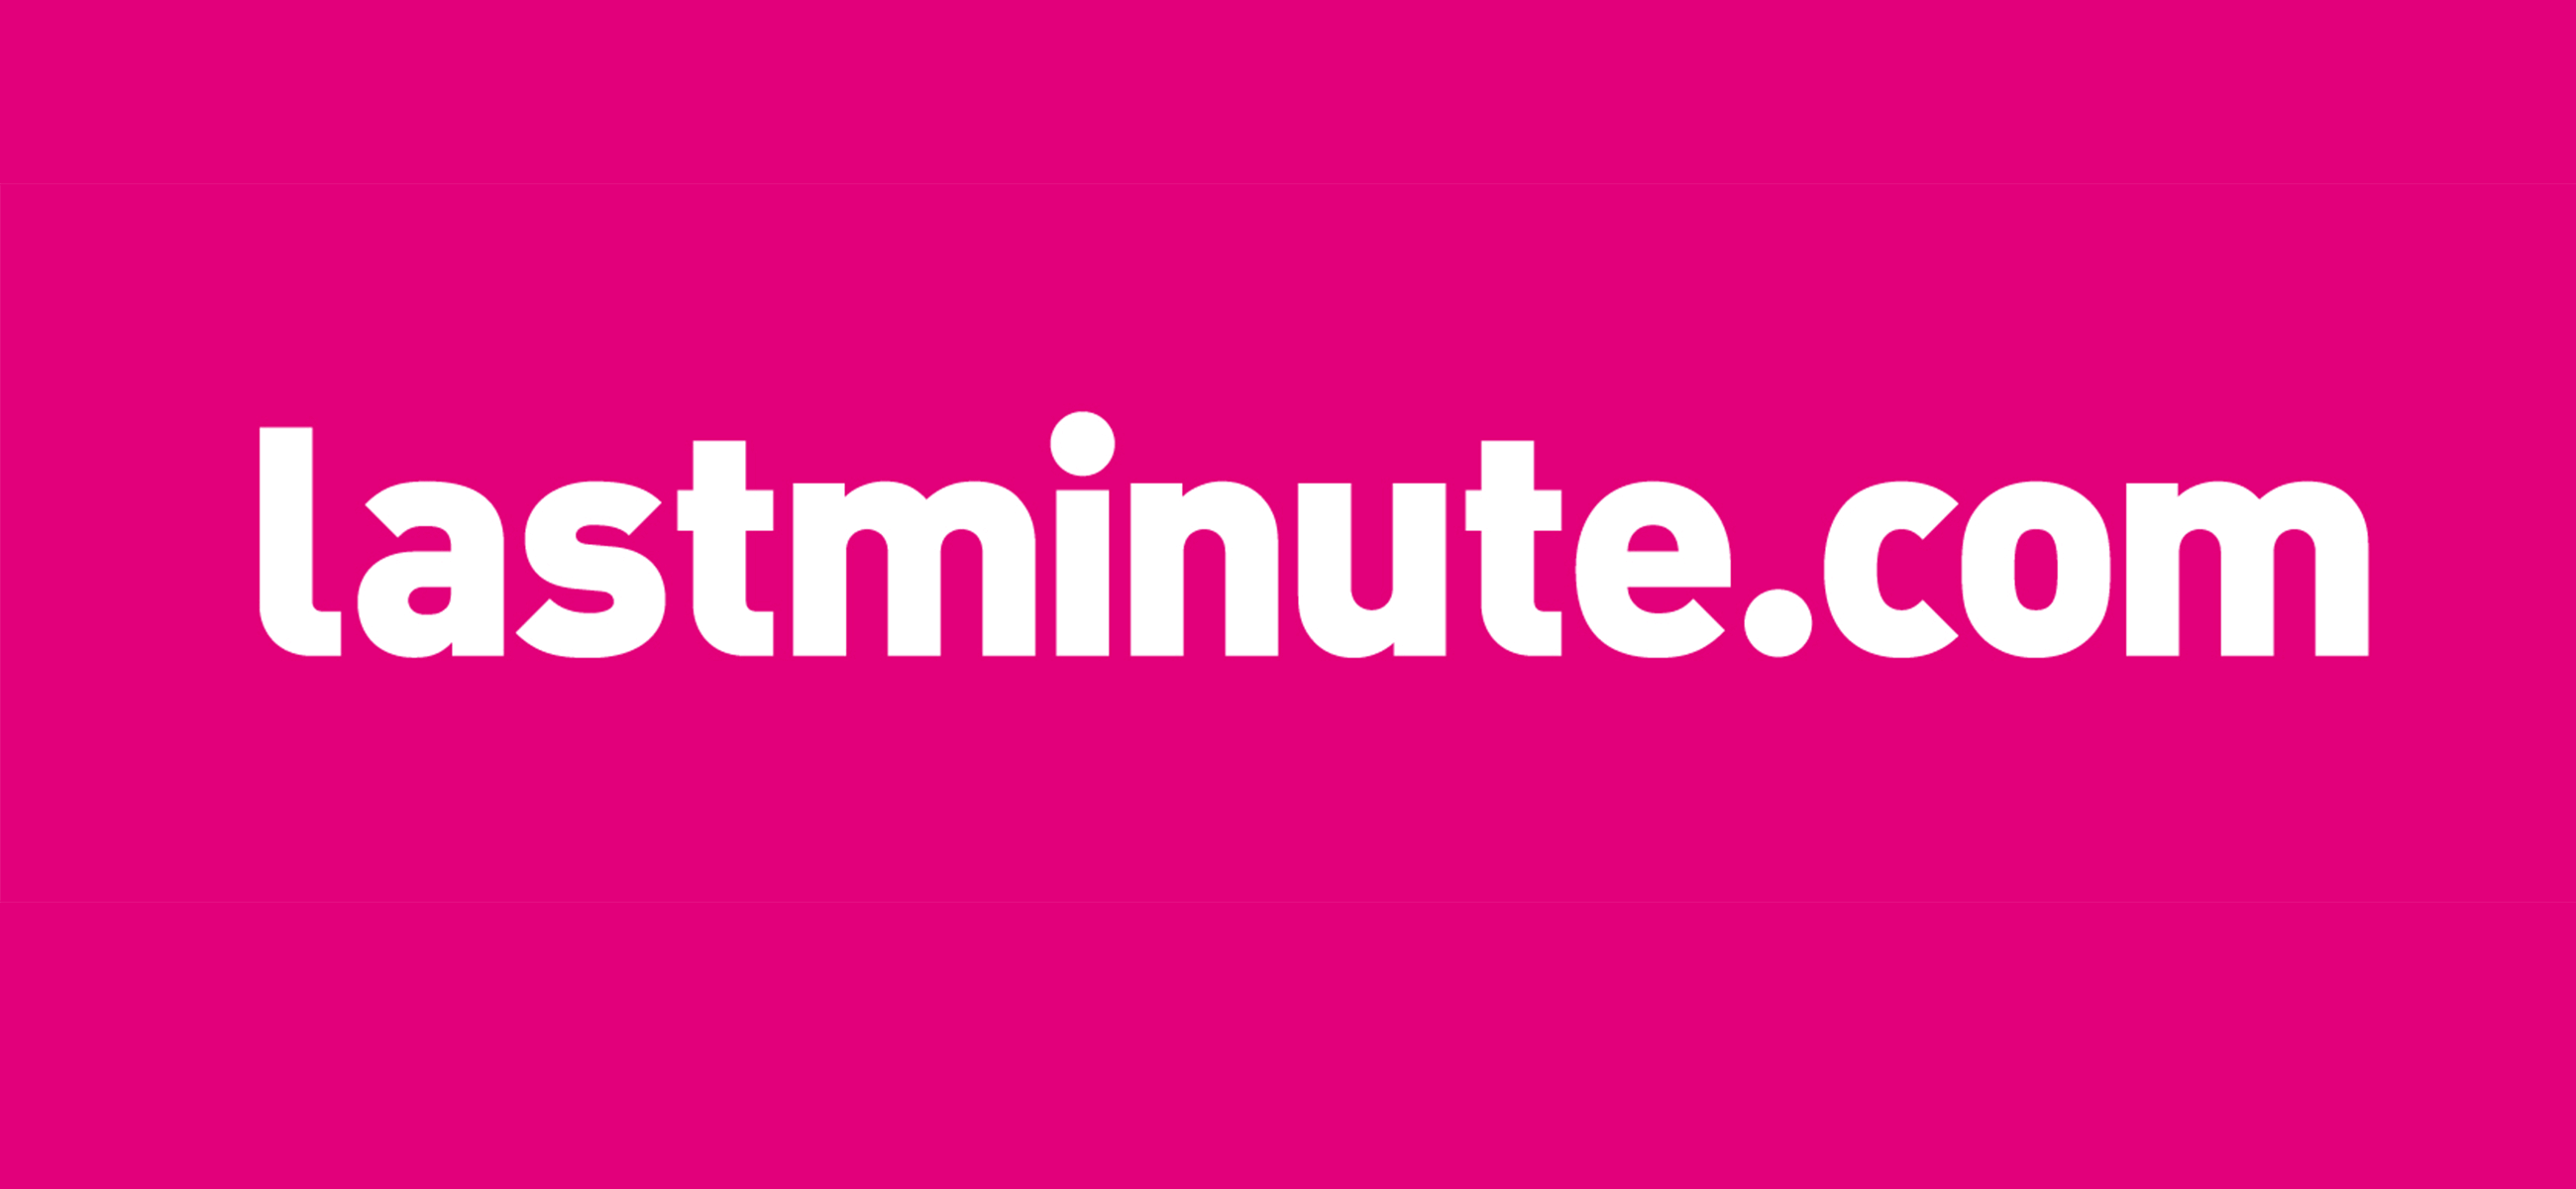 Ласт минут. Lastminute.com. Last minute. Lastminute logo. Minute лого.